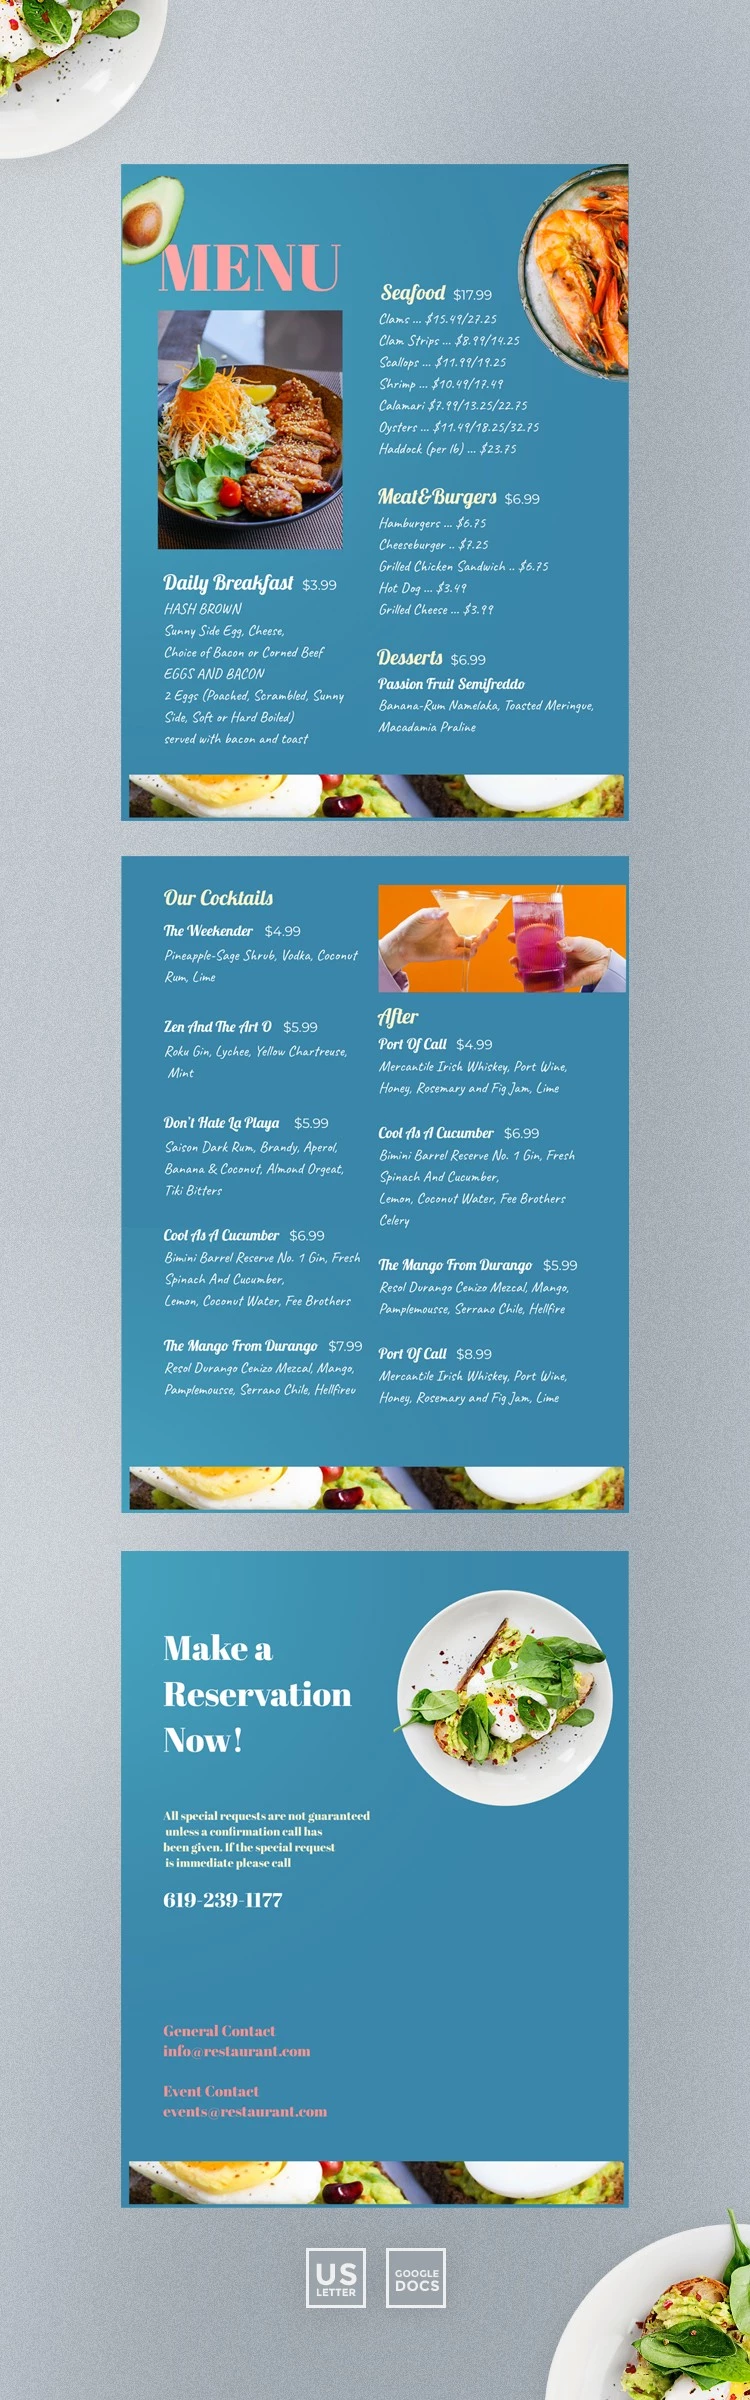 Restaurant Menü Design - free Google Docs Template - 10061509